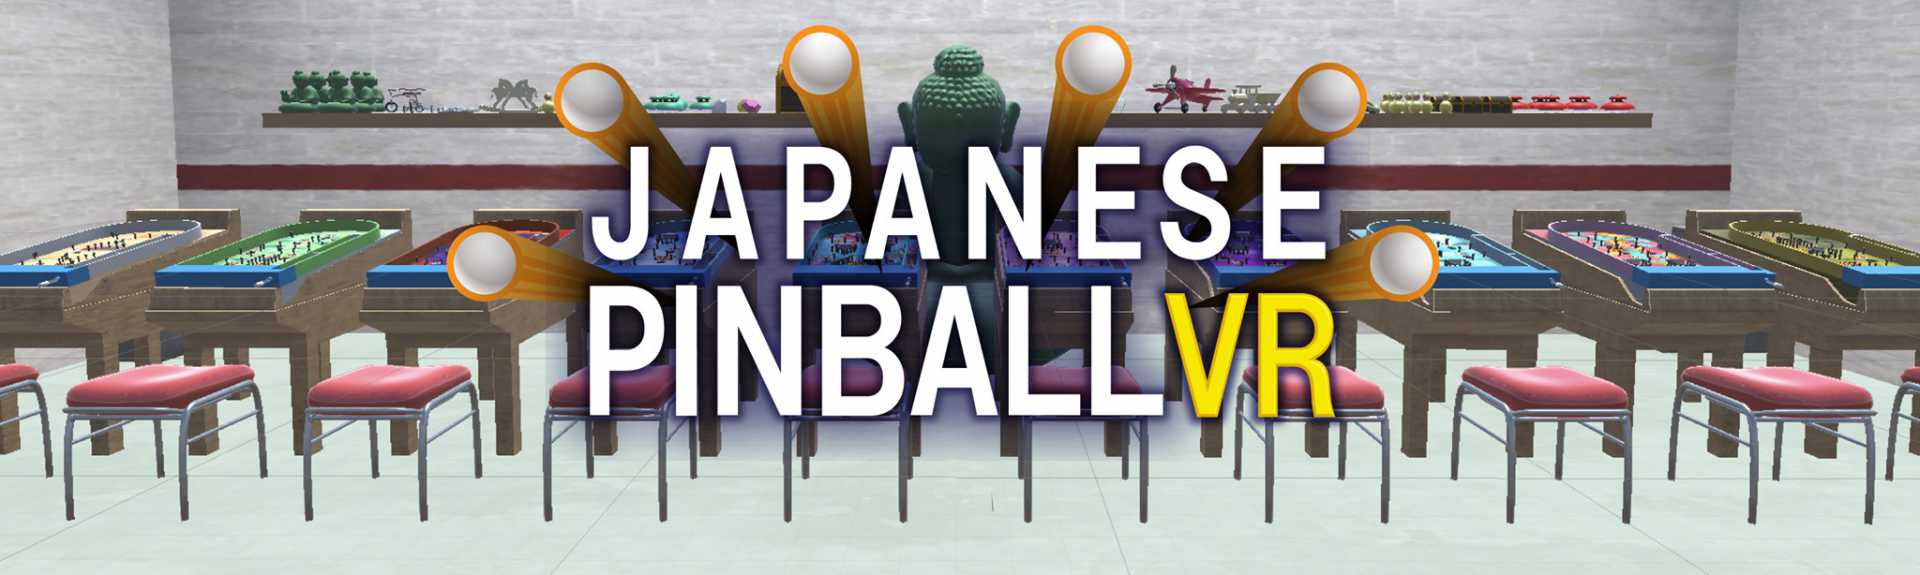 Japanese Pinball VR